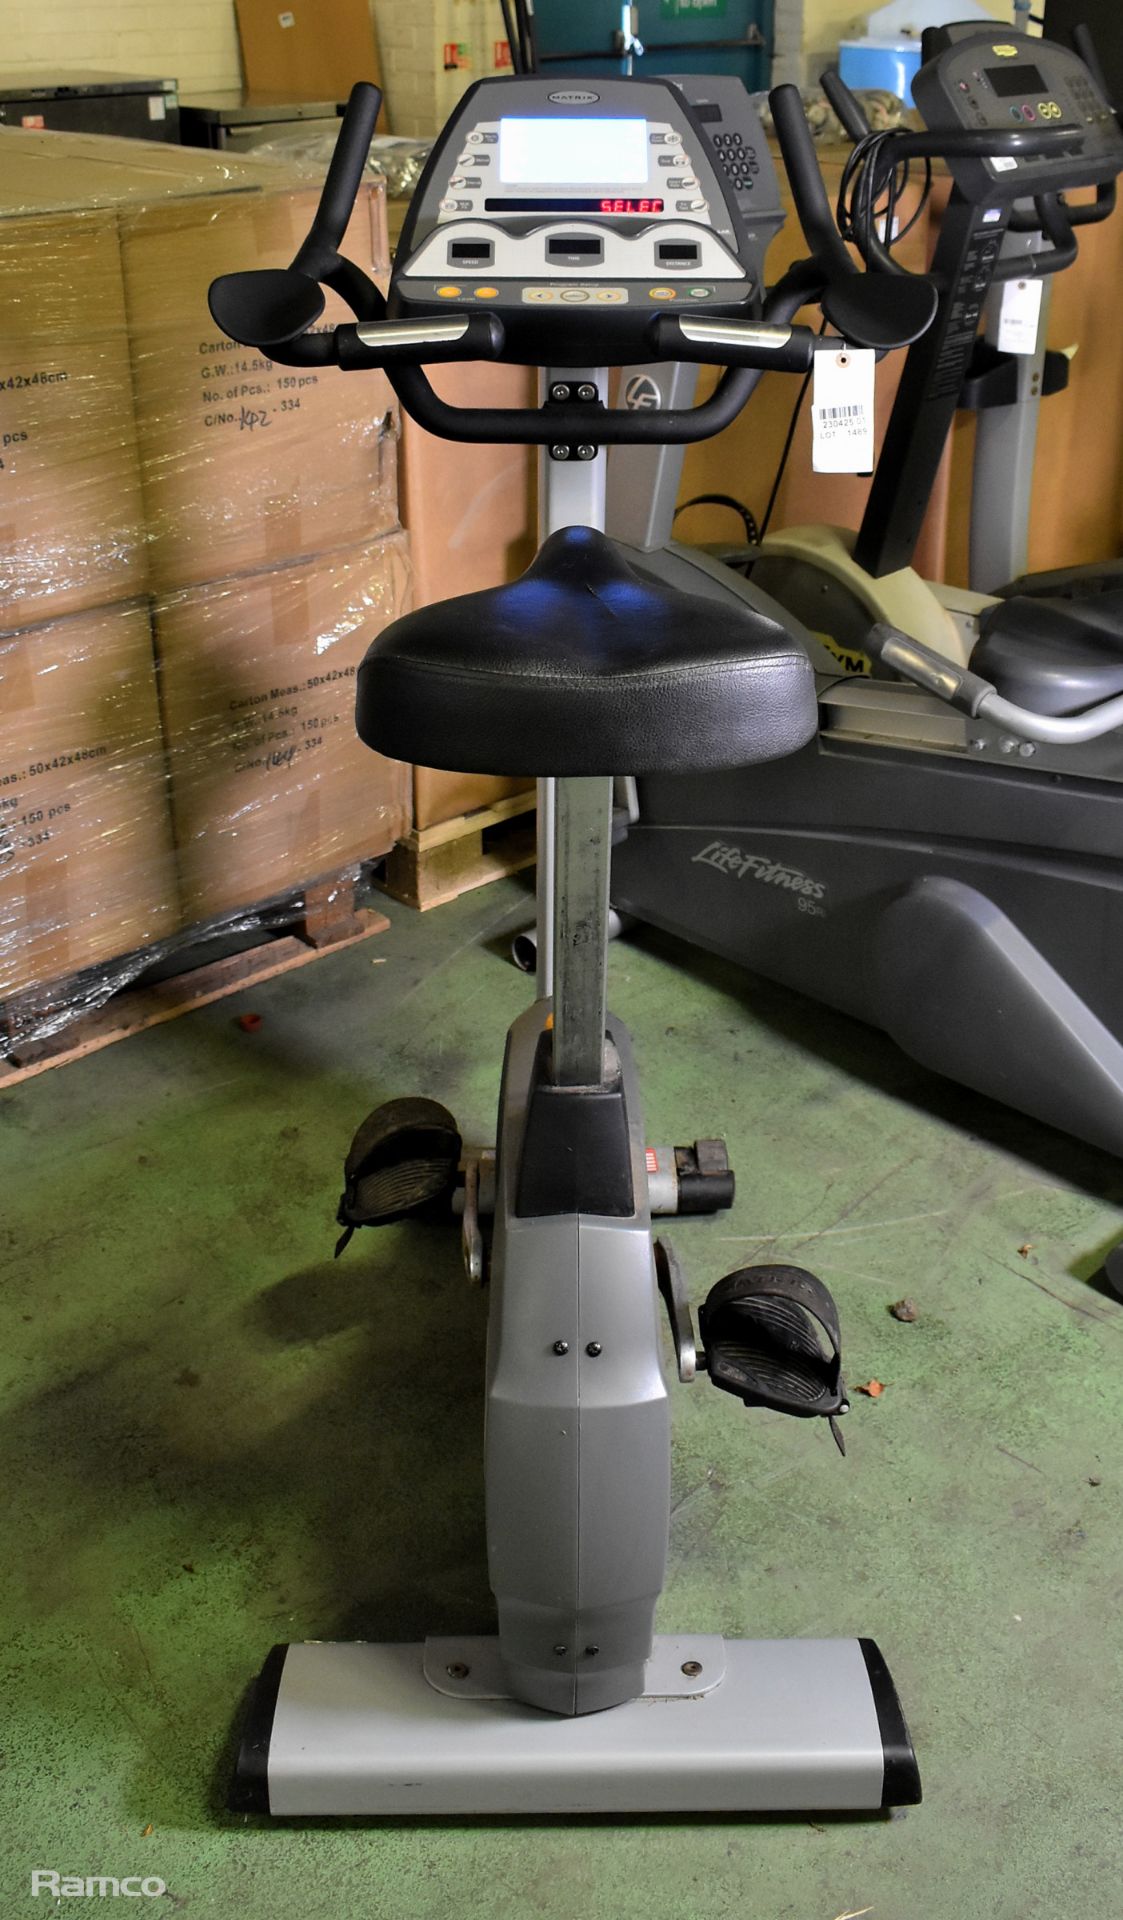 Matrix rehab exercise bike - L 93 x W 56 x H 132cm - Image 7 of 7